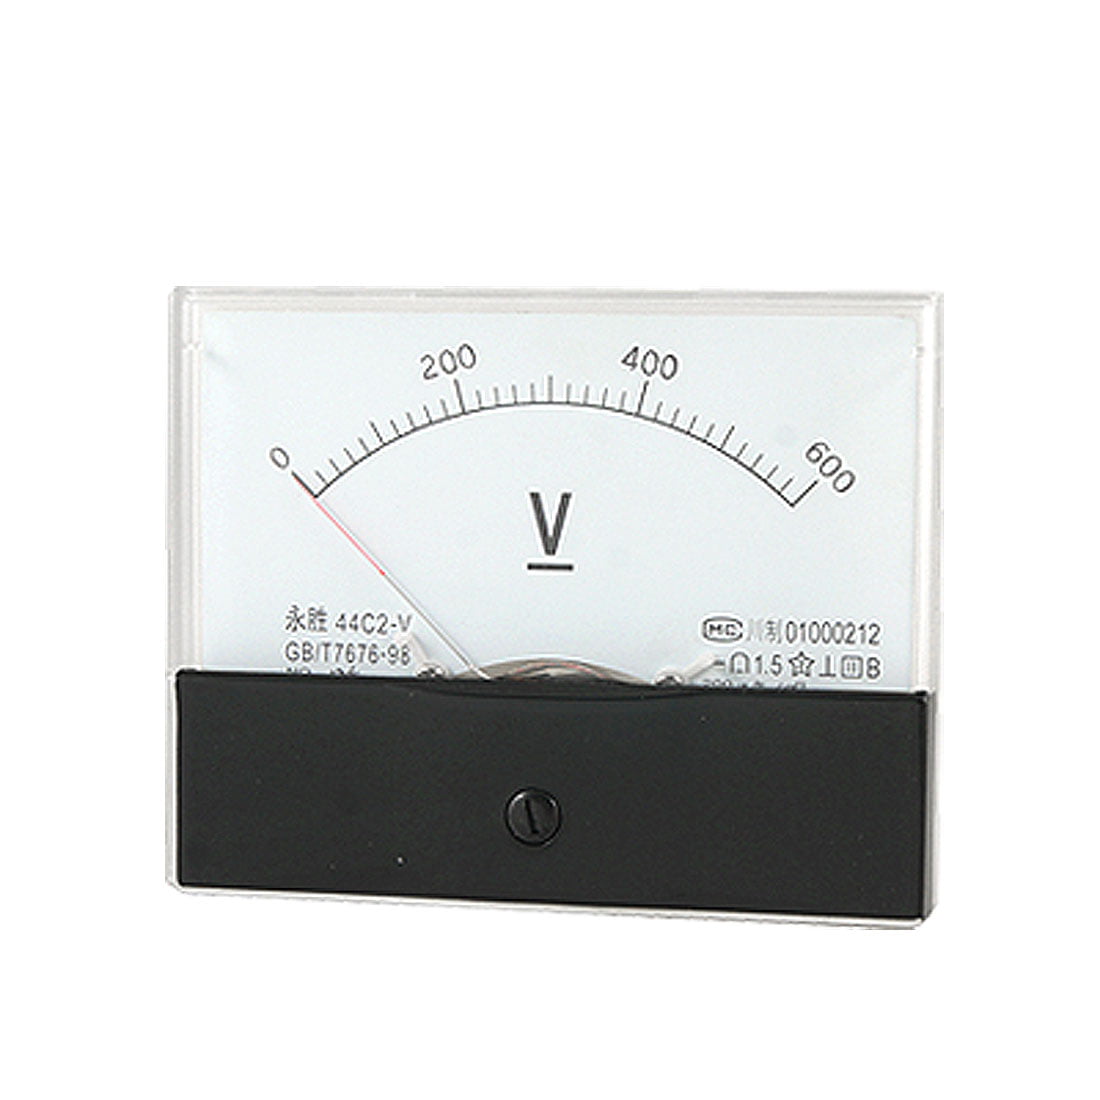 1Pcs New DC 10V Analog Panel Voltmeter Volt Meter DC 0-10V Measuring Range 44C2 